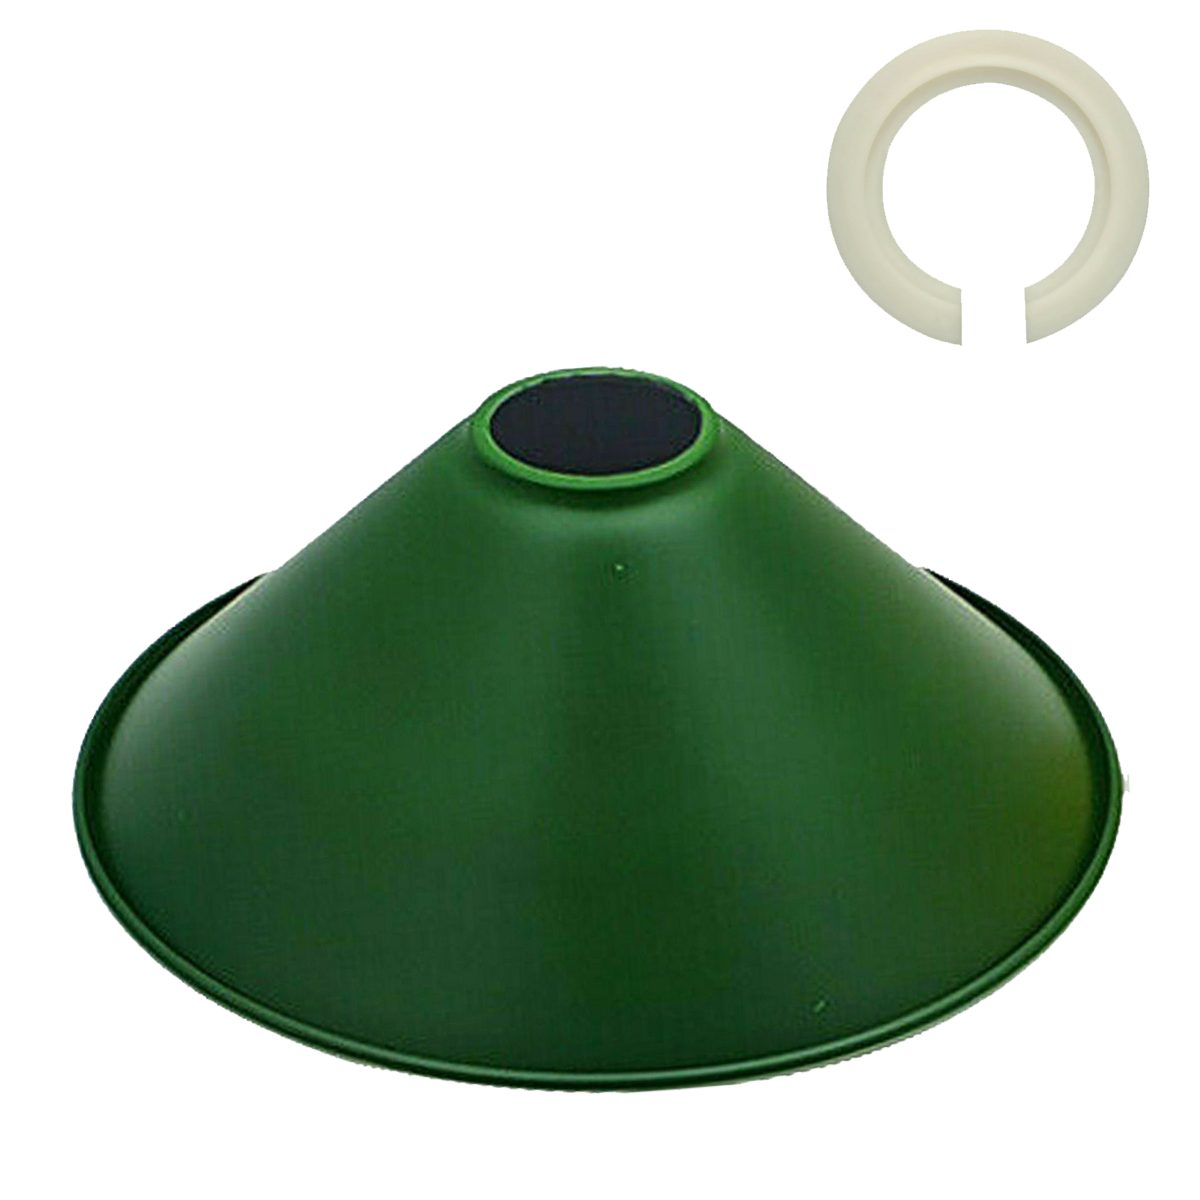 Modern Ceiling Pendant Light Shades Green Colour Lamp Shades Easy Fit~1108 - LEDSone UK Ltd